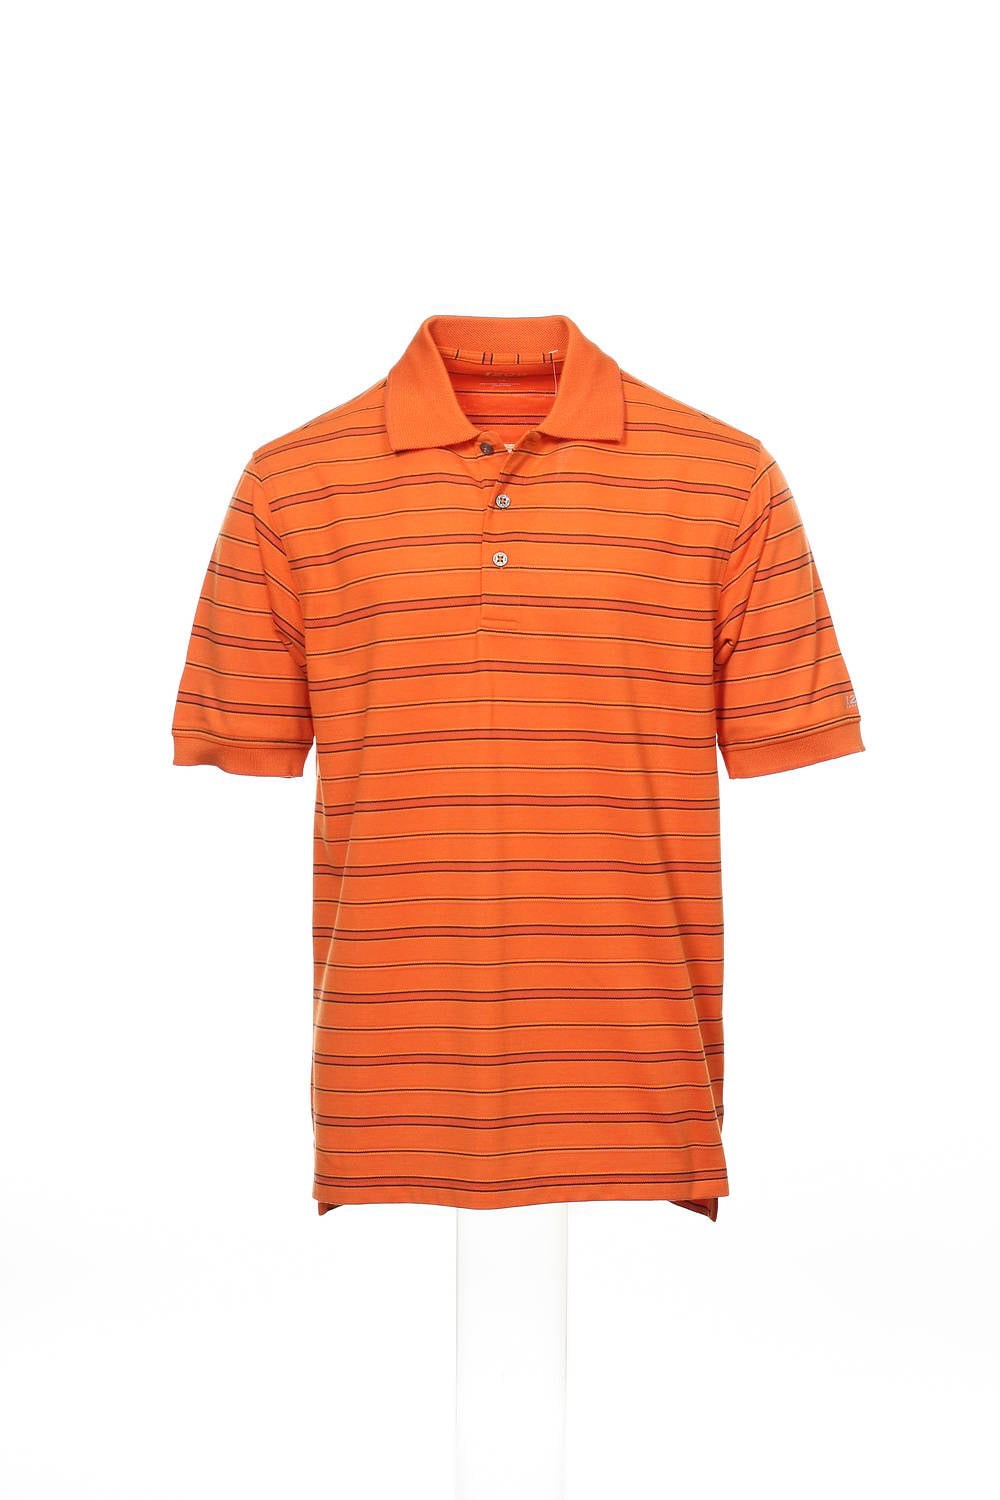 Izod 'Perform X' Orange Striped Polo Shirt Golf , Size Small - Walmart.com